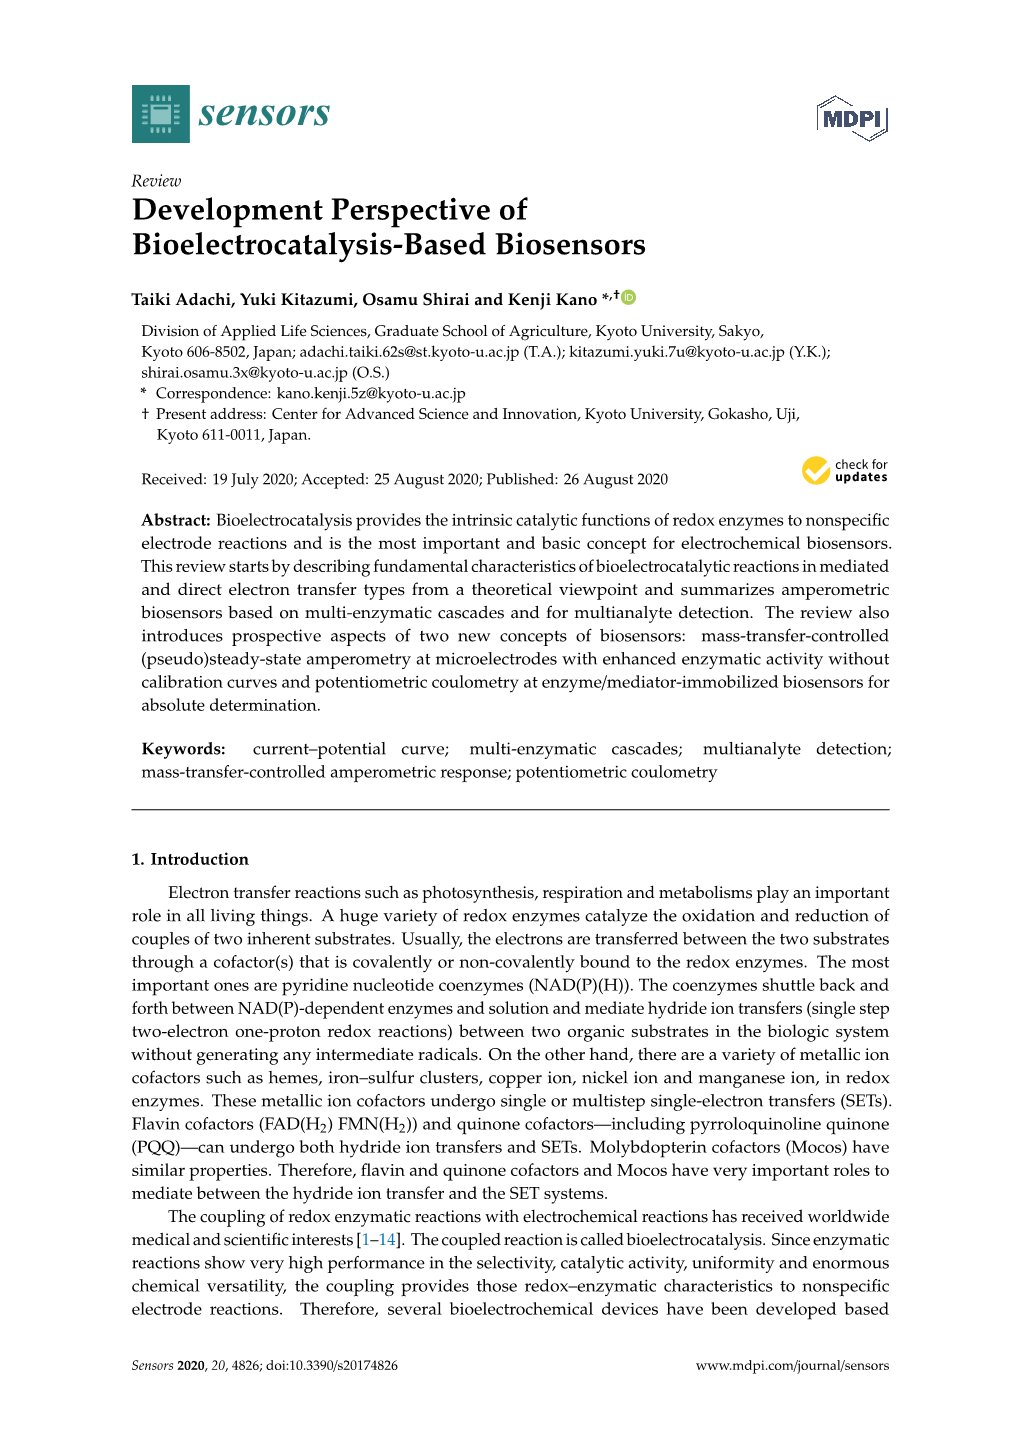 Development Perspective of Bioelectrocatalysis-Based Biosensors